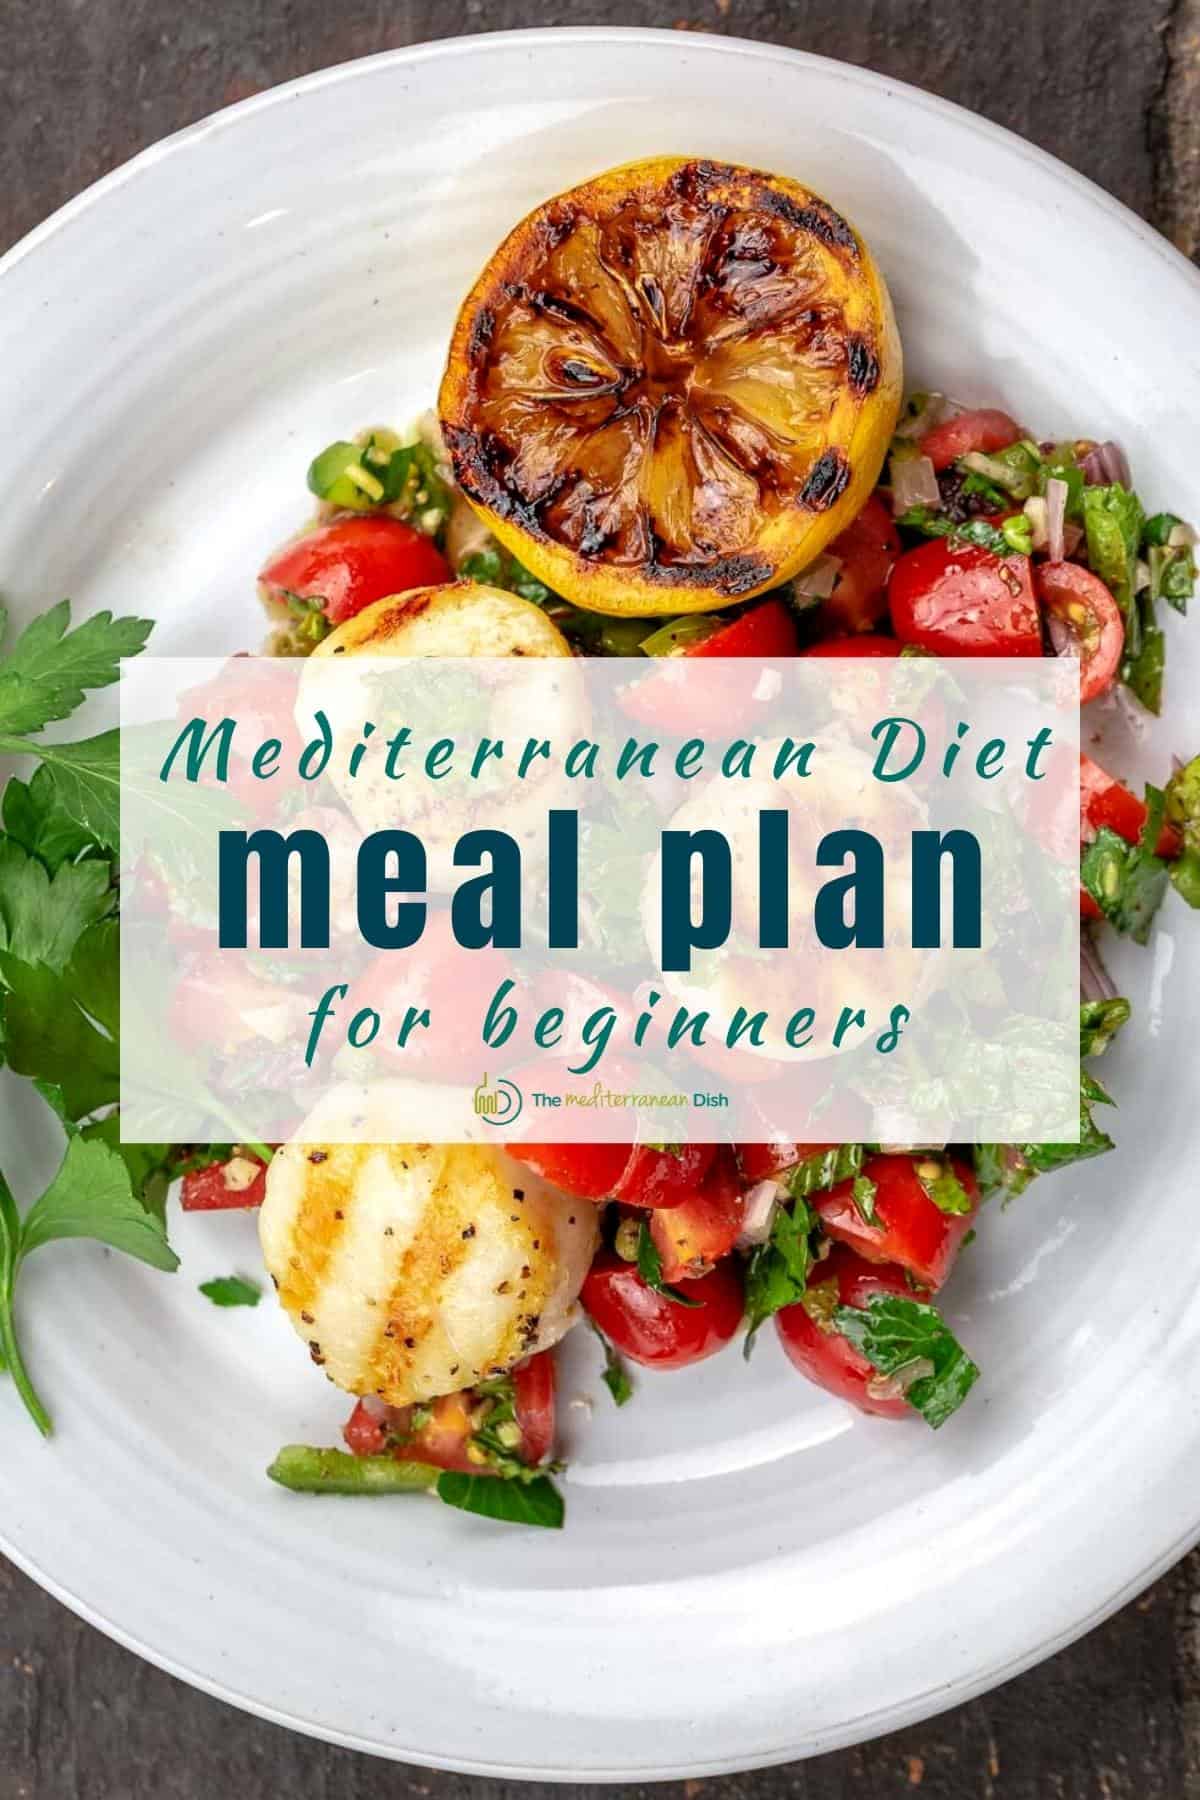 https://www.themediterraneandish.com/wp-content/uploads/2021/12/Meal-Plan-BLOG-2.jpg